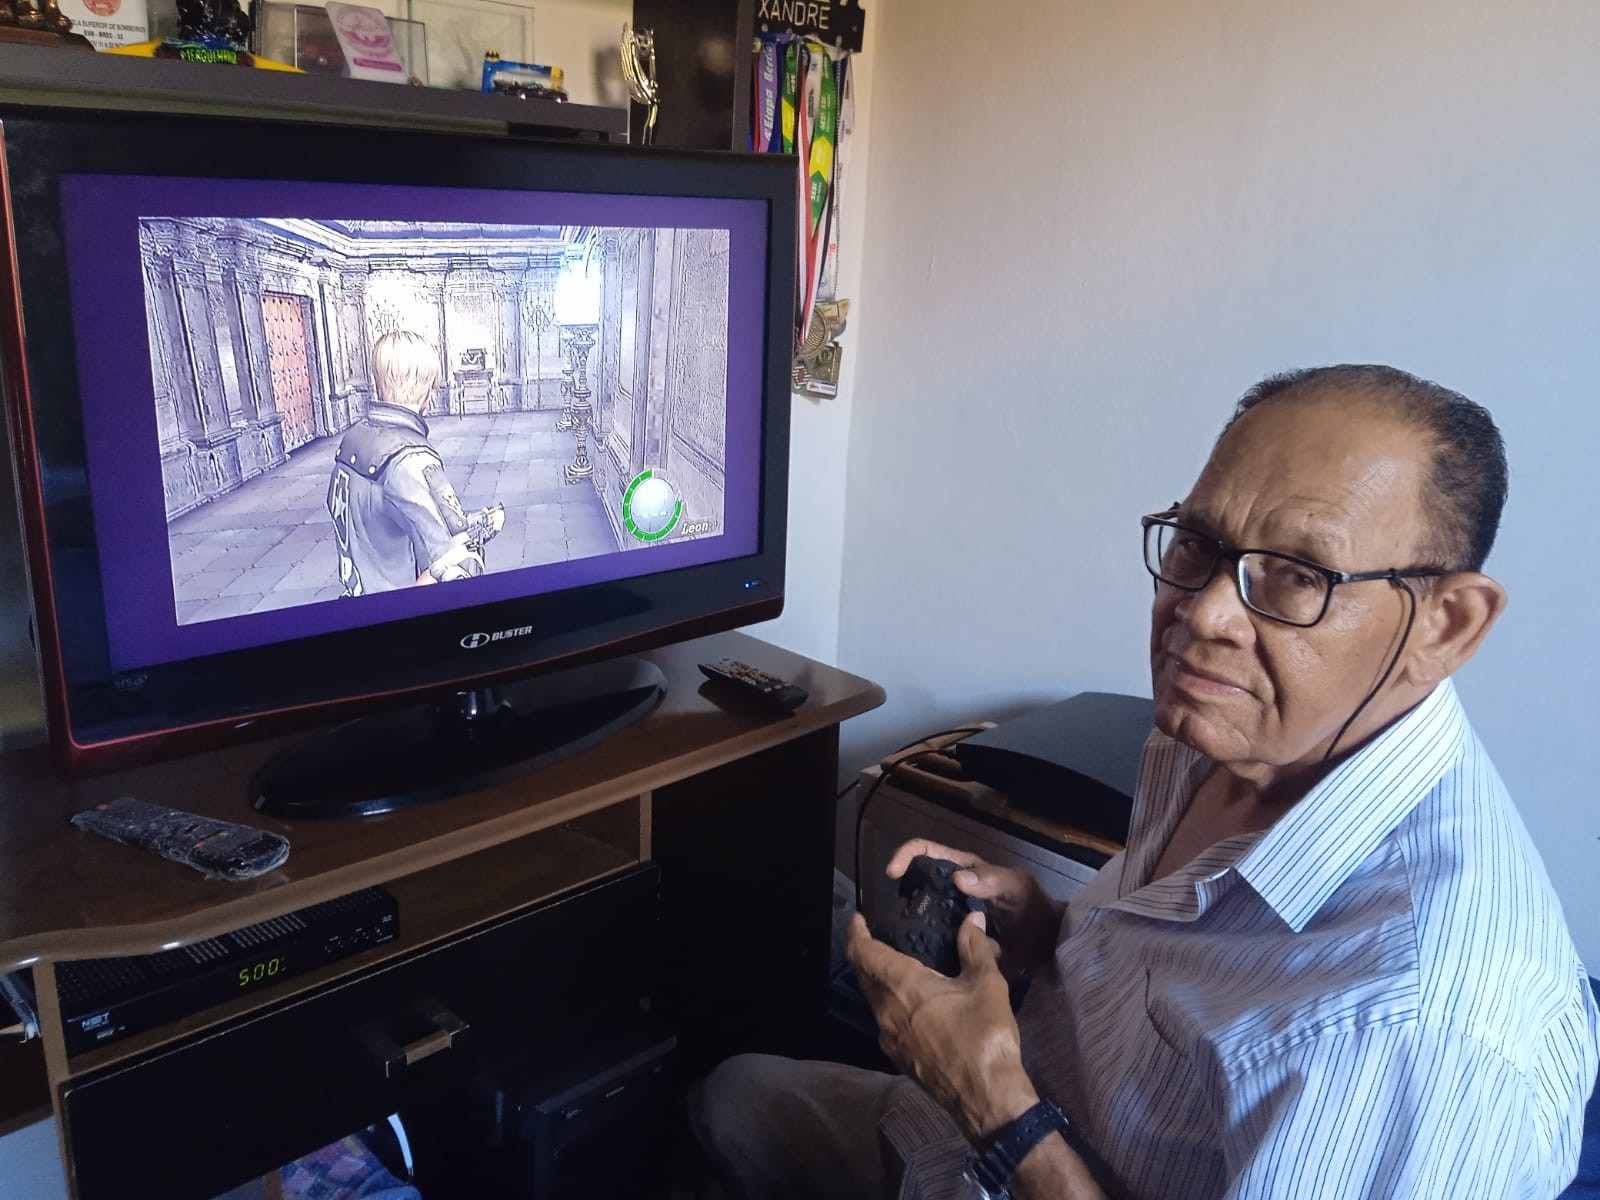 Psicólogo destaca benefícios dos videogames para os idosos: 'Enfrenta zumbis e melhora a saúde'